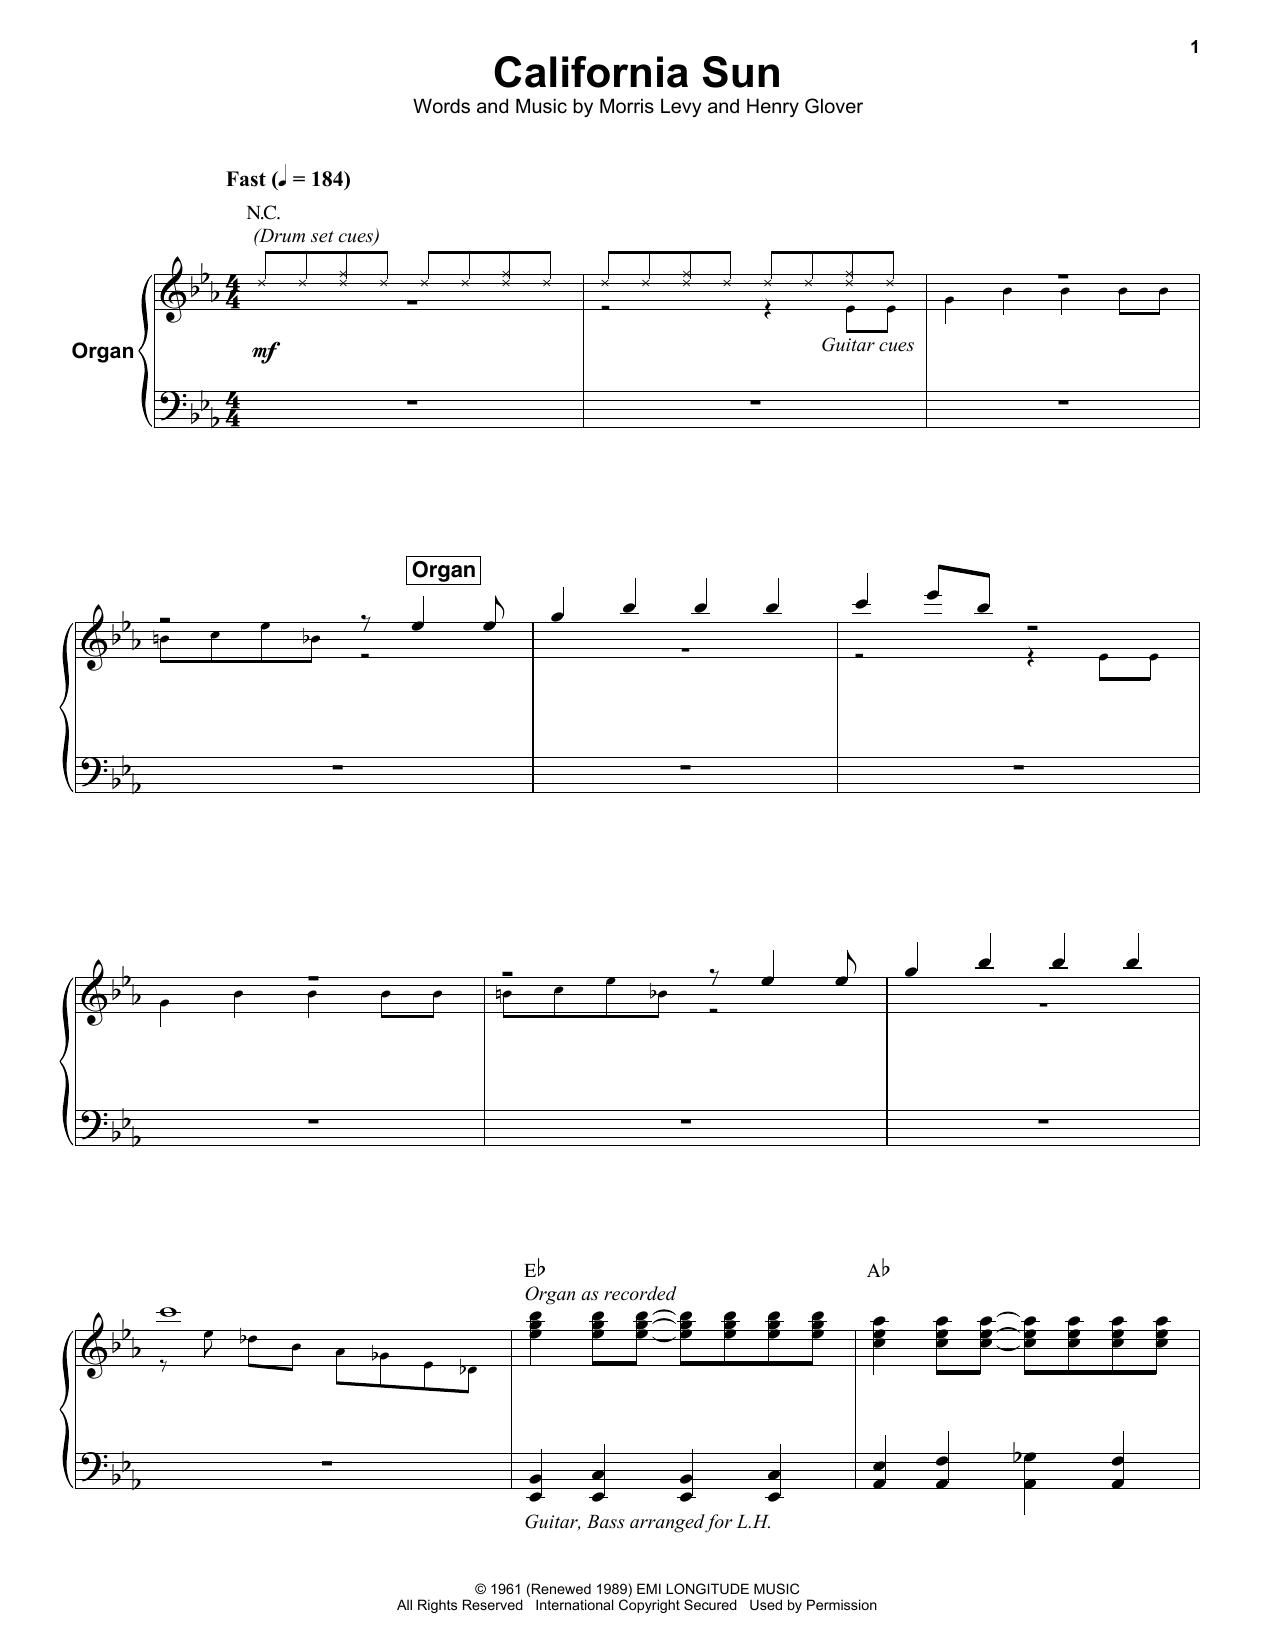 Rivieras California Sun Sheet Music Notes & Chords for Dulcimer - Download or Print PDF